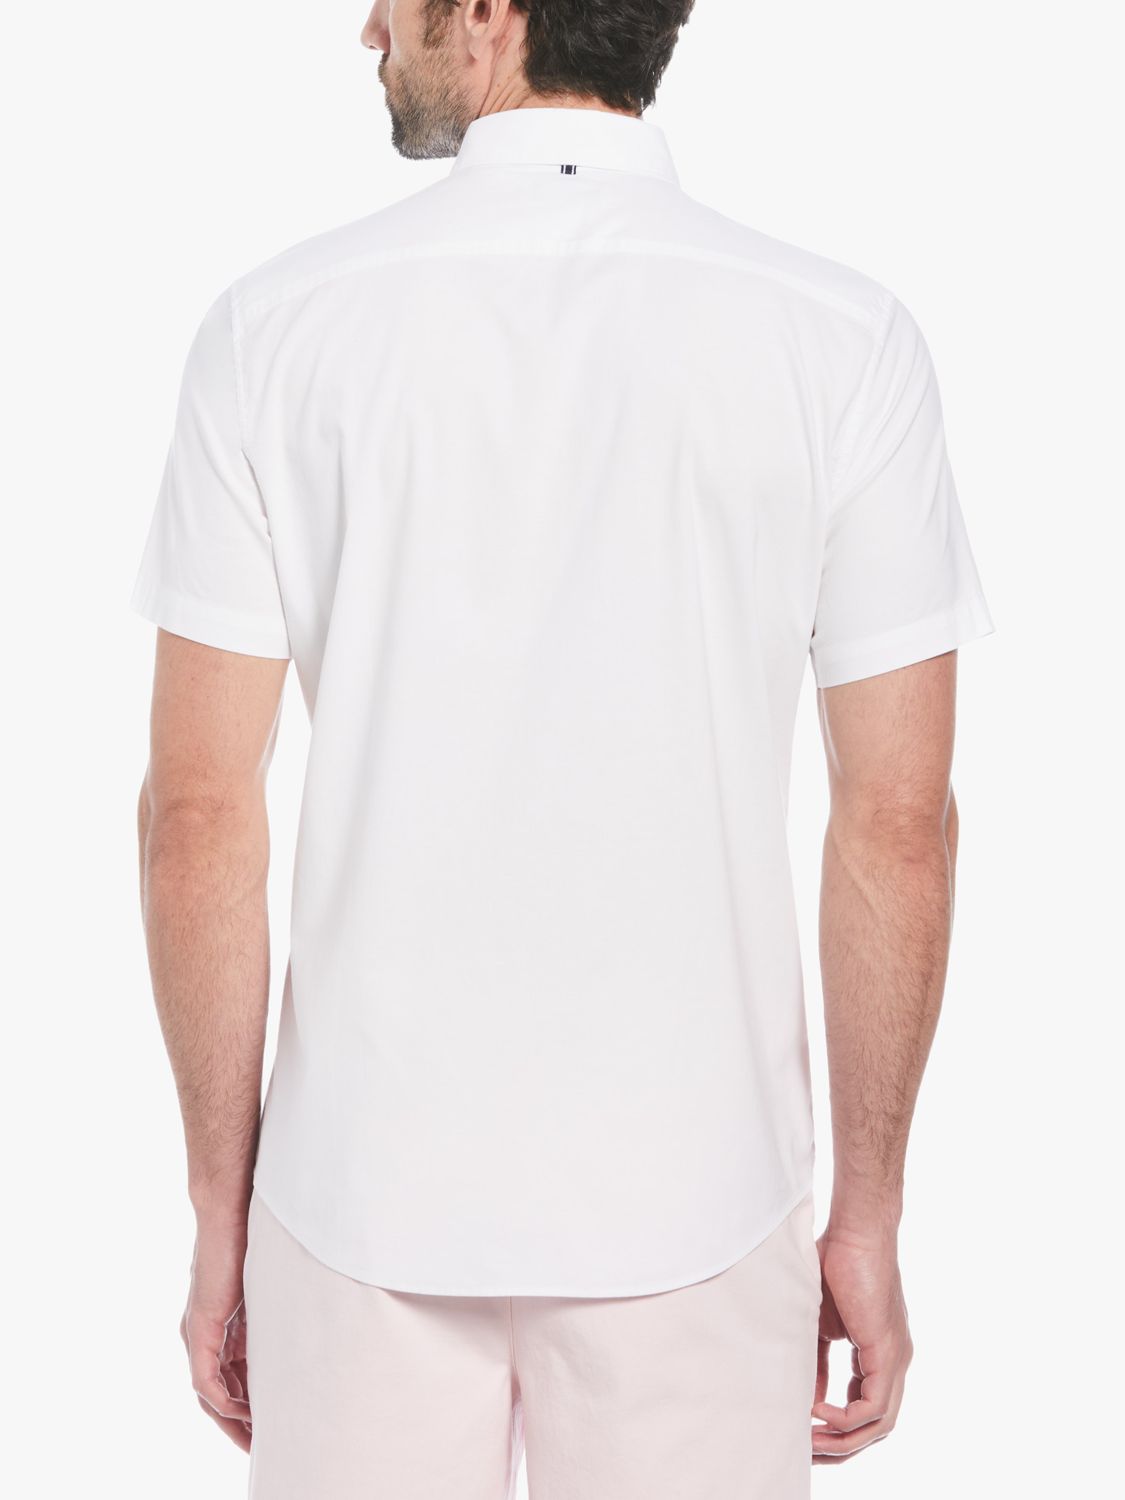 Original Penguin Short Sleeve Stretch Oxford Shirt, White, L